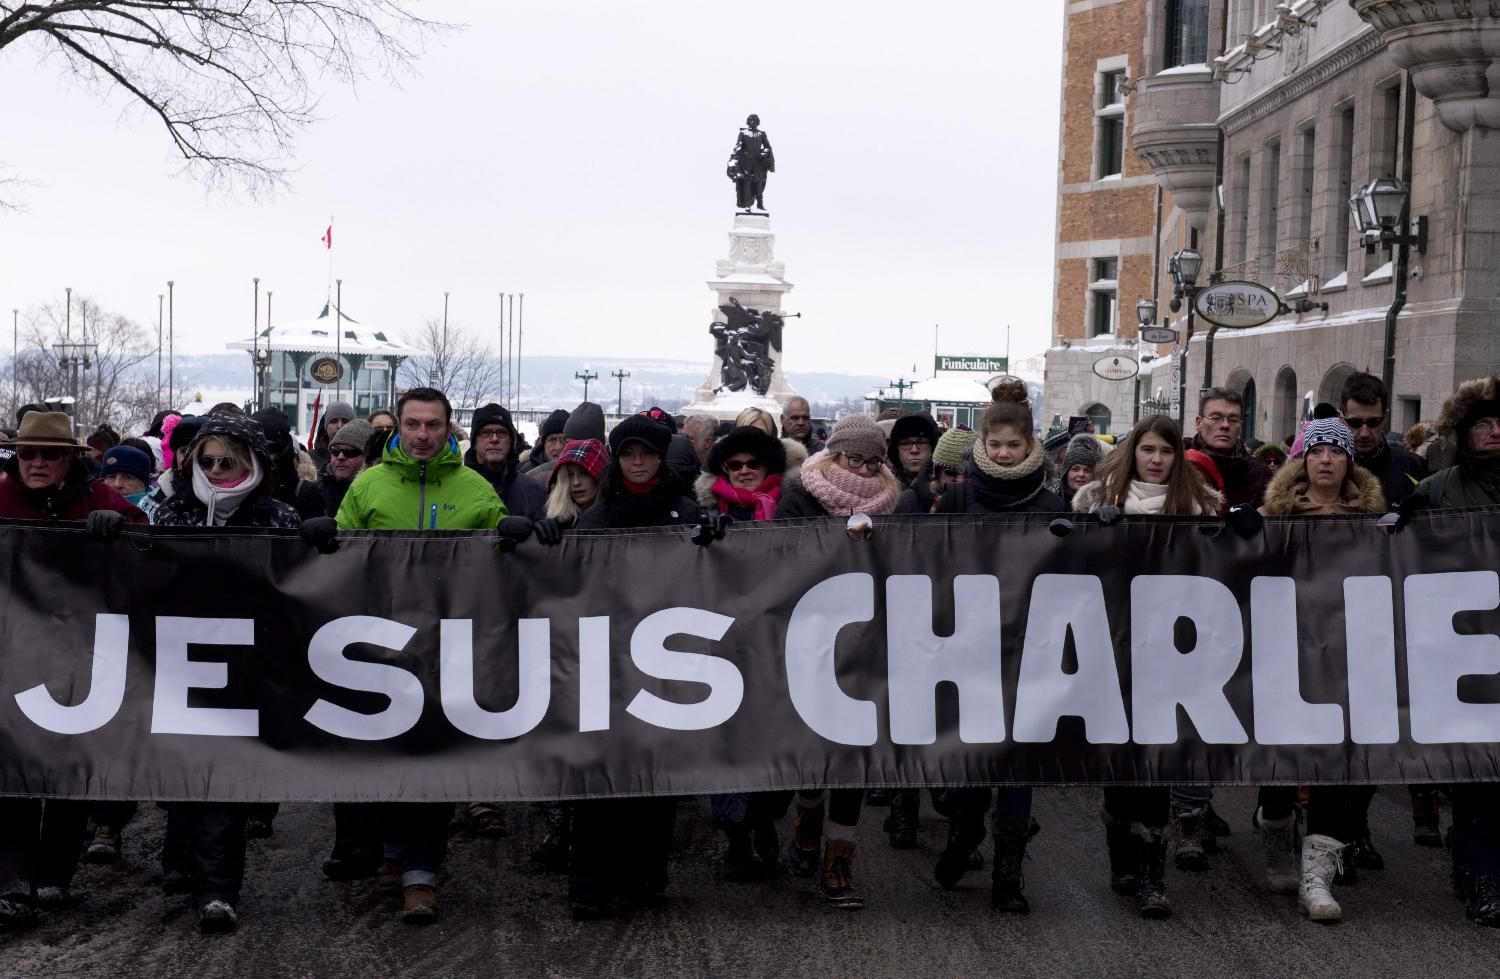 Mesto: Quebec City Datum: 11.01.2015 Dogadjaj: DRUTVO/TERORIZAM - Mar solidarnosti u Kvebeku povodom teroristièkog napada na redakciju satiriènog lista "arli Ebdo" (Charlie Hebdo) u Parizu Licnosti: